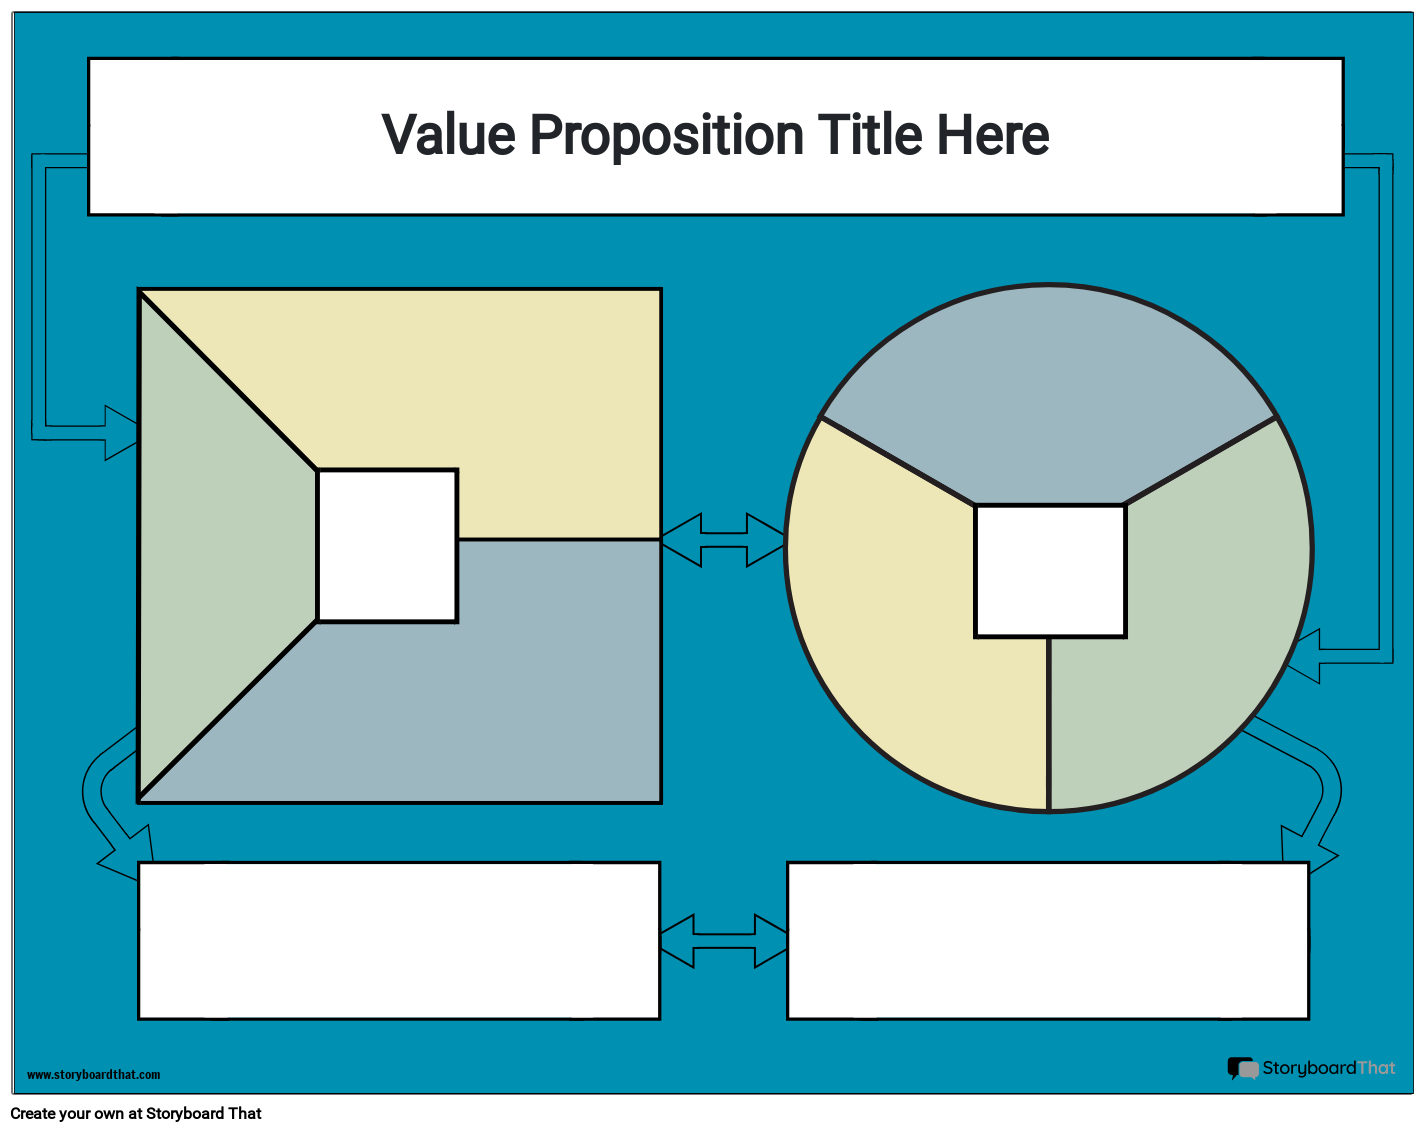 Corporate Value Preposition Template 1